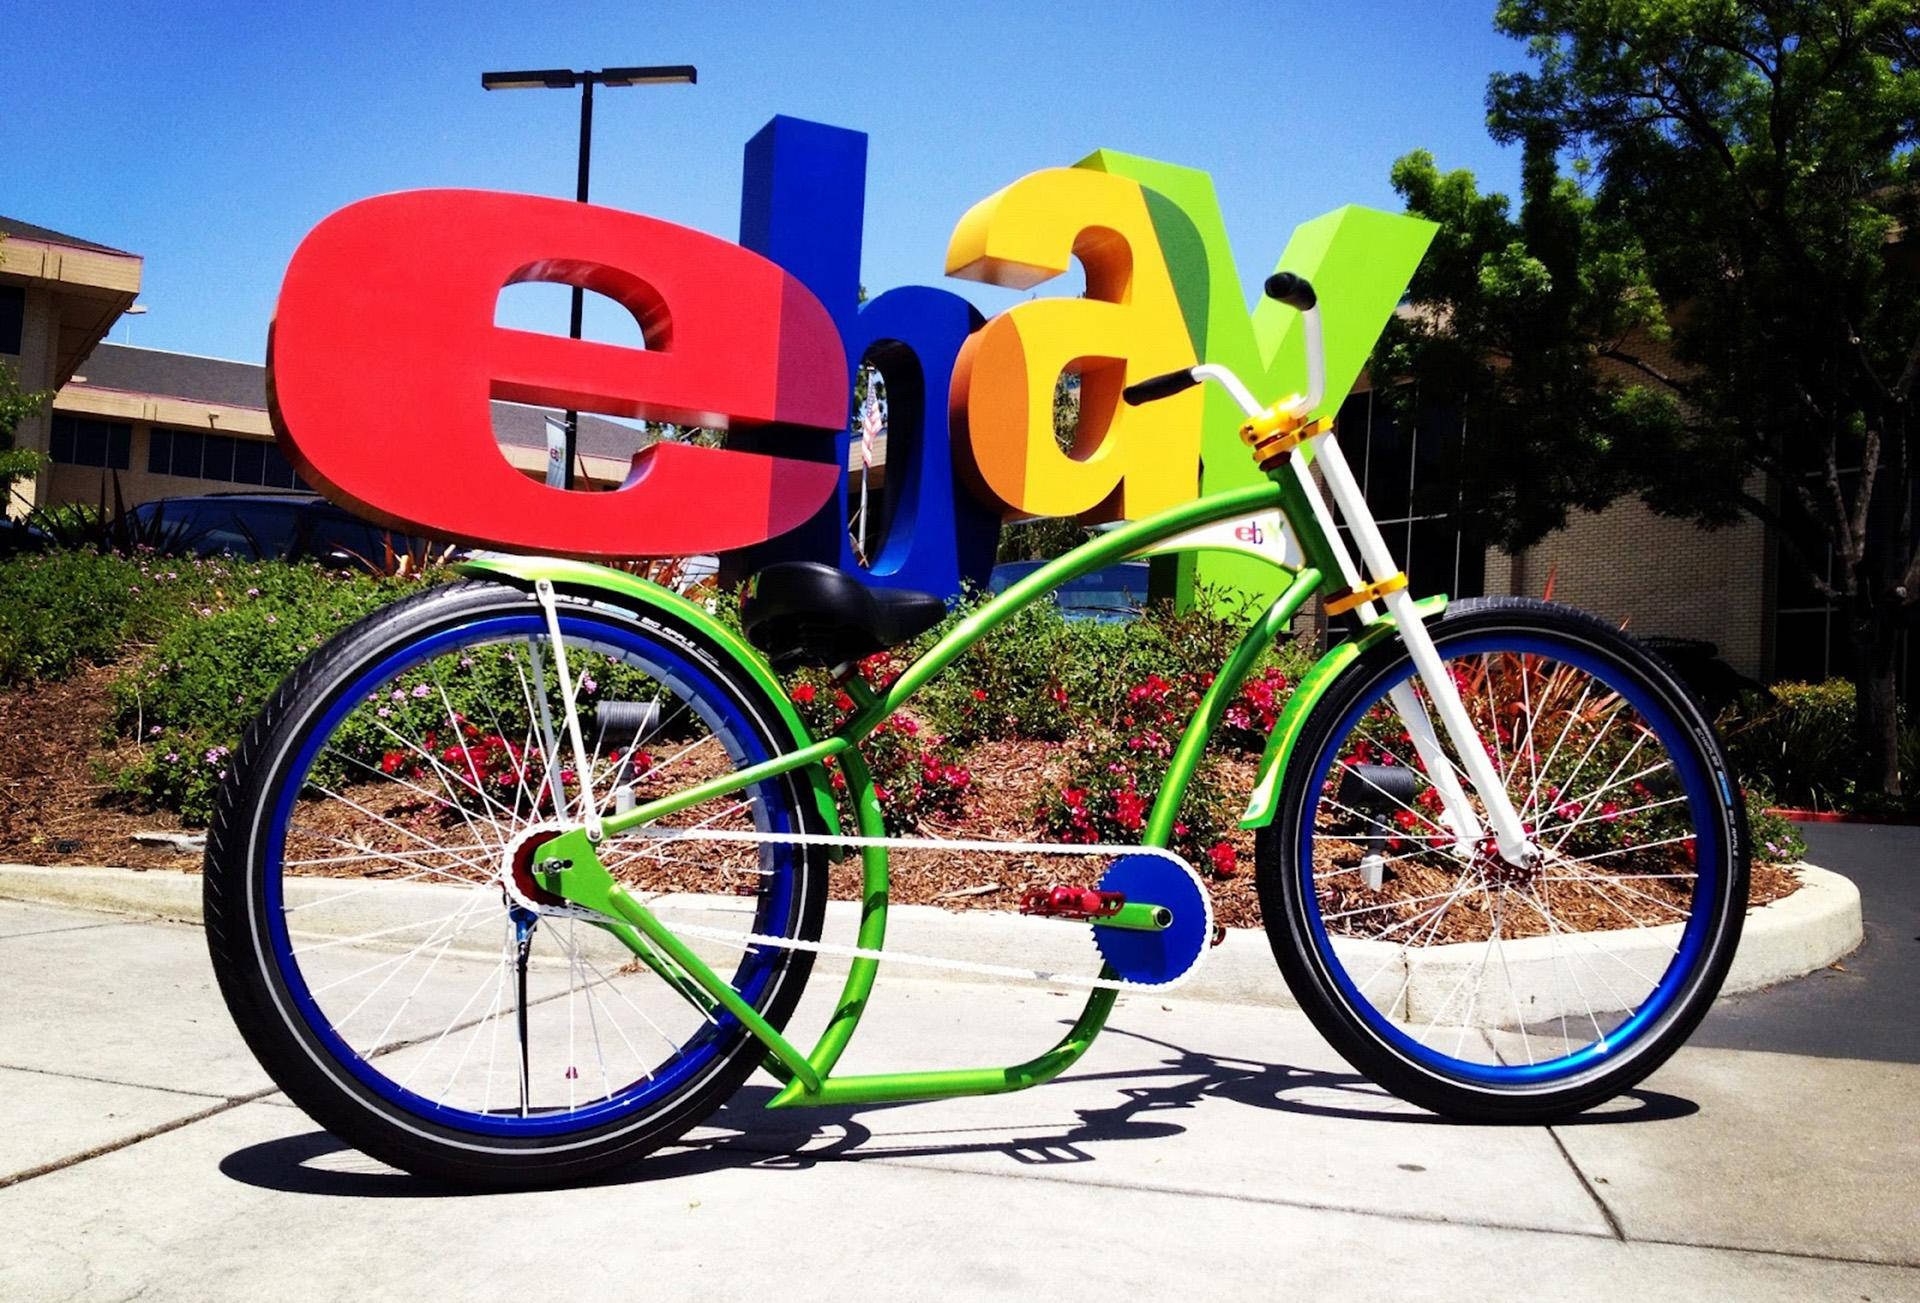 Ebay Logo And Bicycle Wallpaper